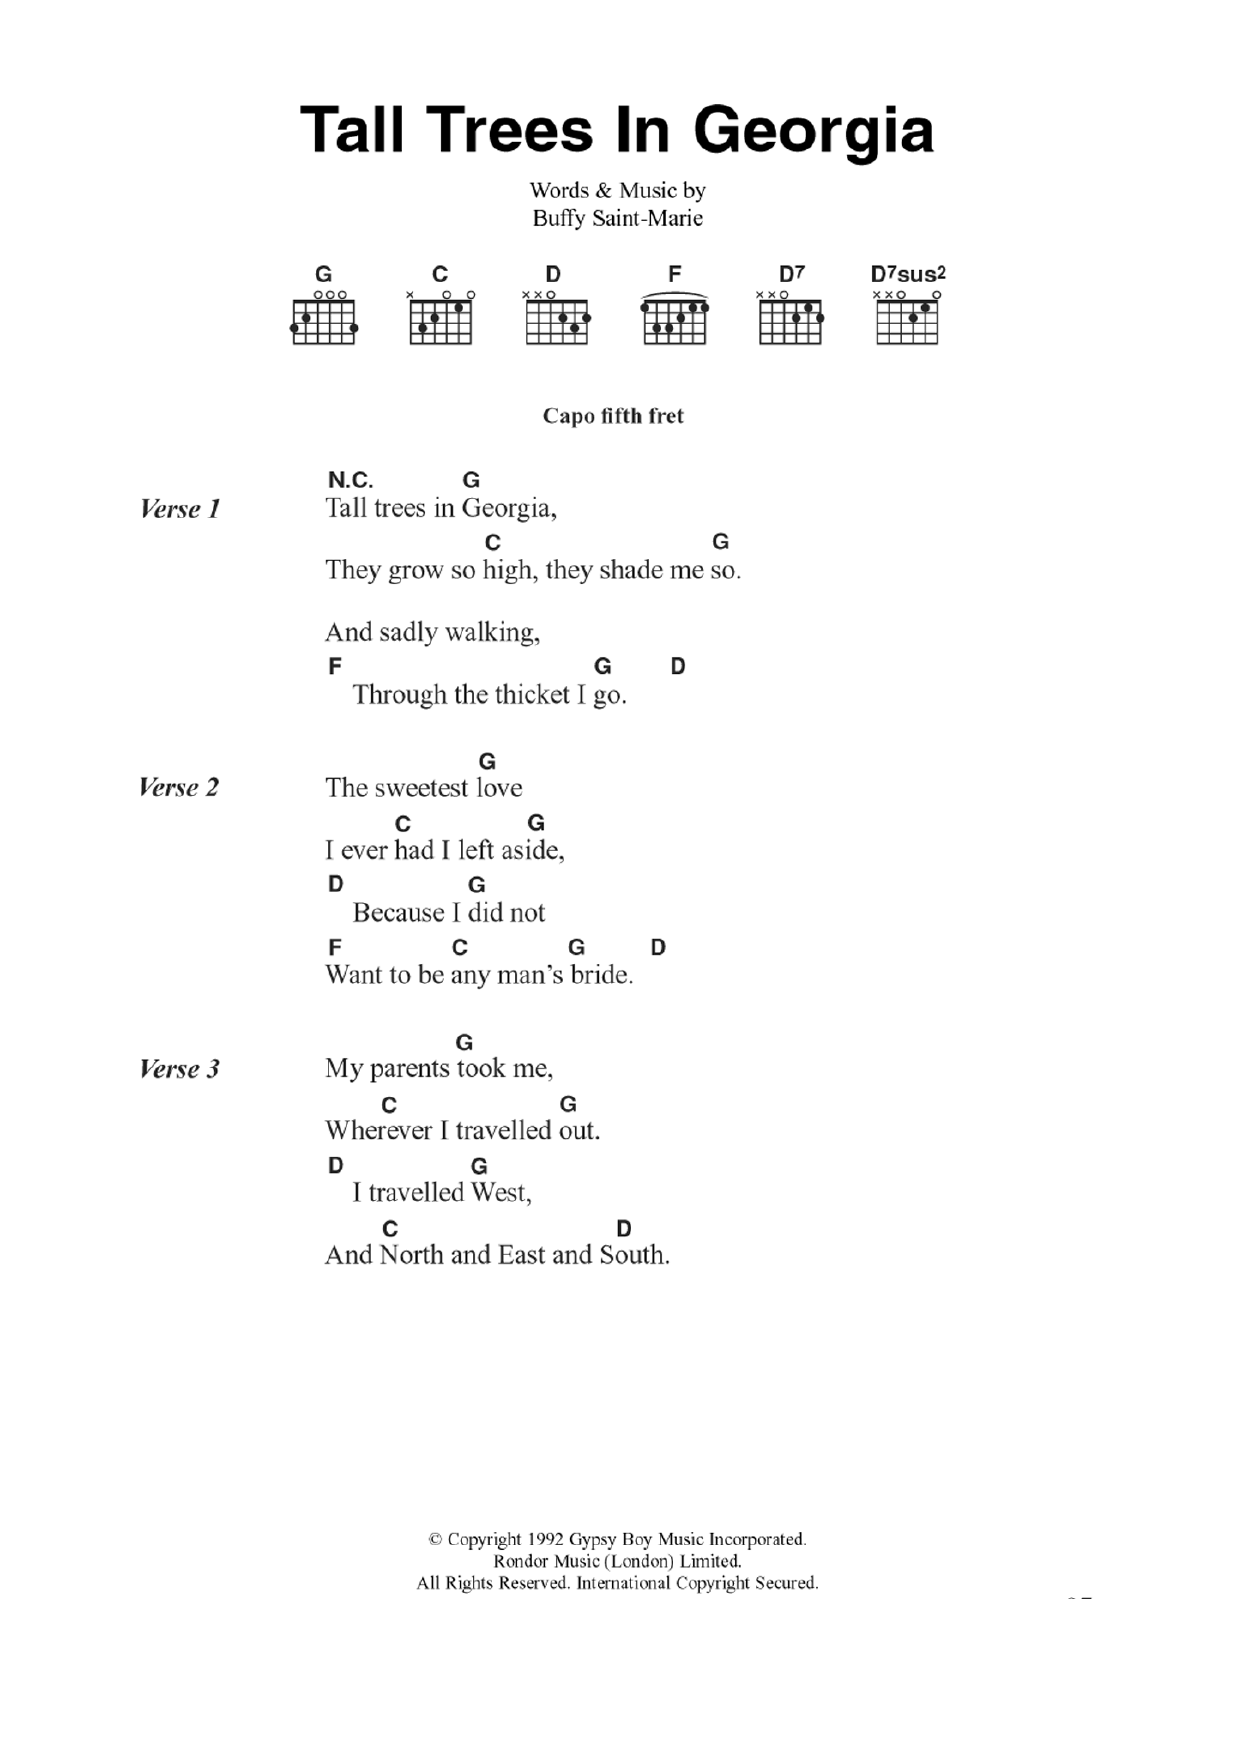 Buffy Sainte-Marie Tall Trees In Georgia Sheet Music Notes & Chords for Guitar Chords/Lyrics - Download or Print PDF